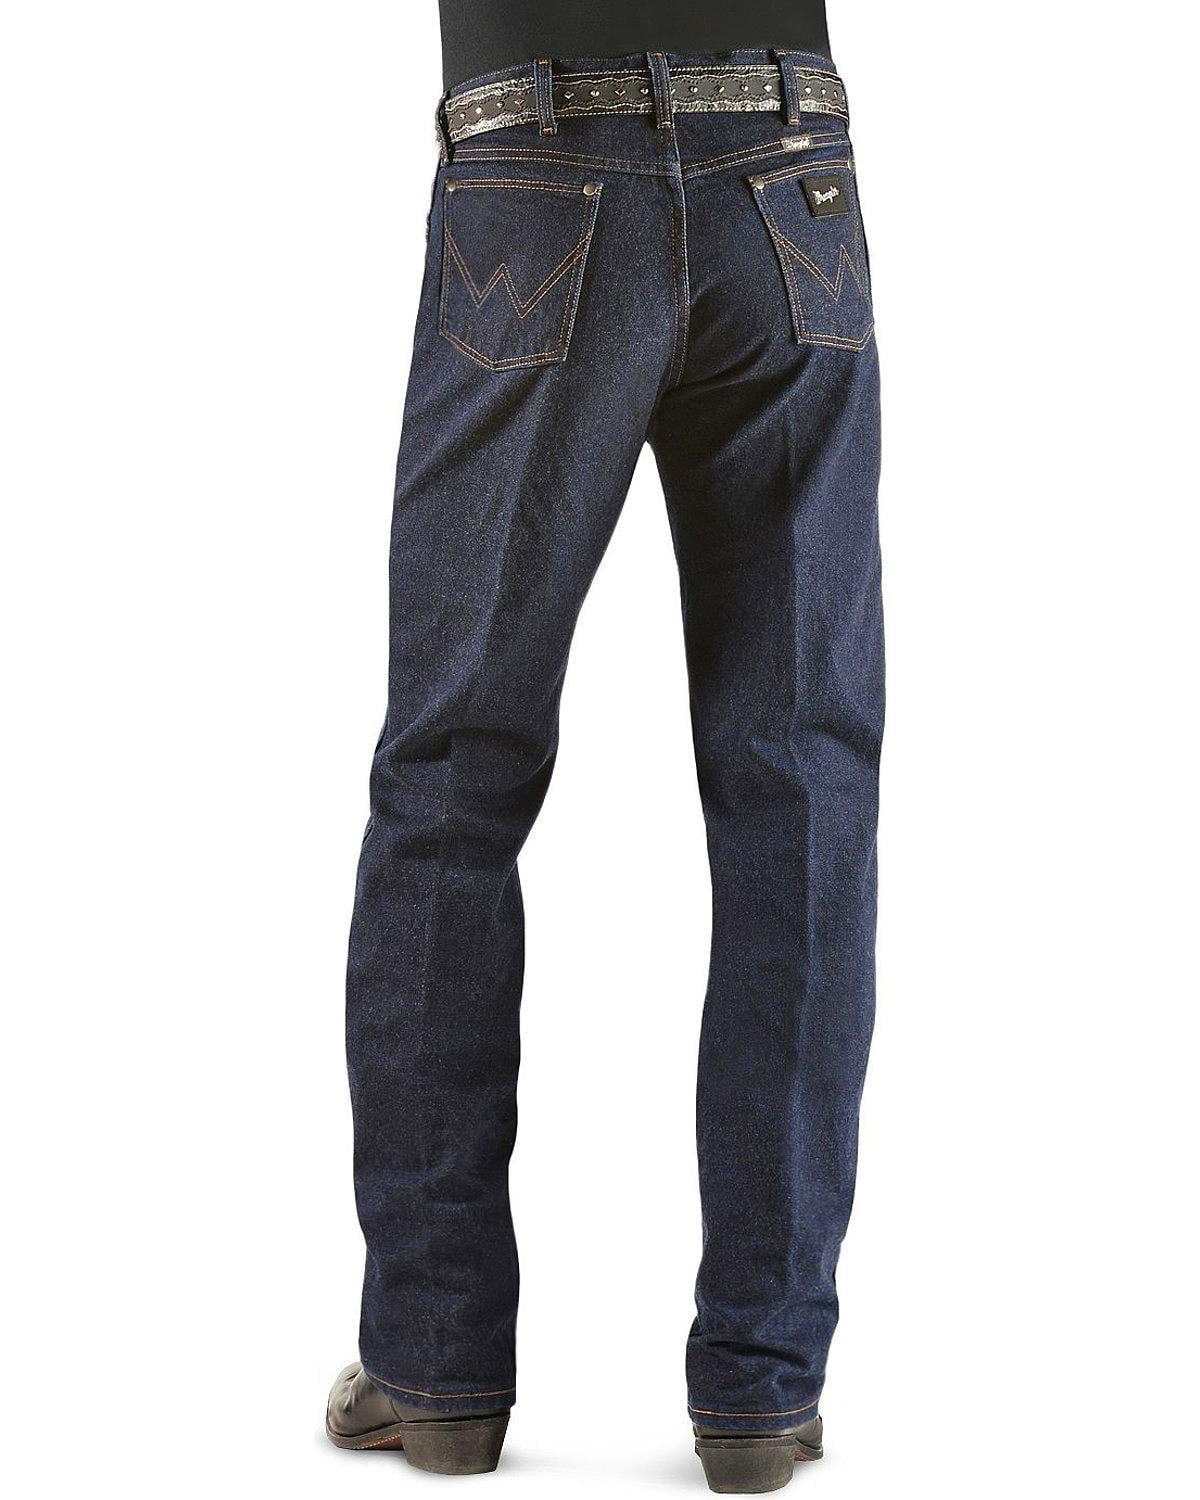 Wrangler - wrangler men's jeans 13mwz original fit silver edition ...